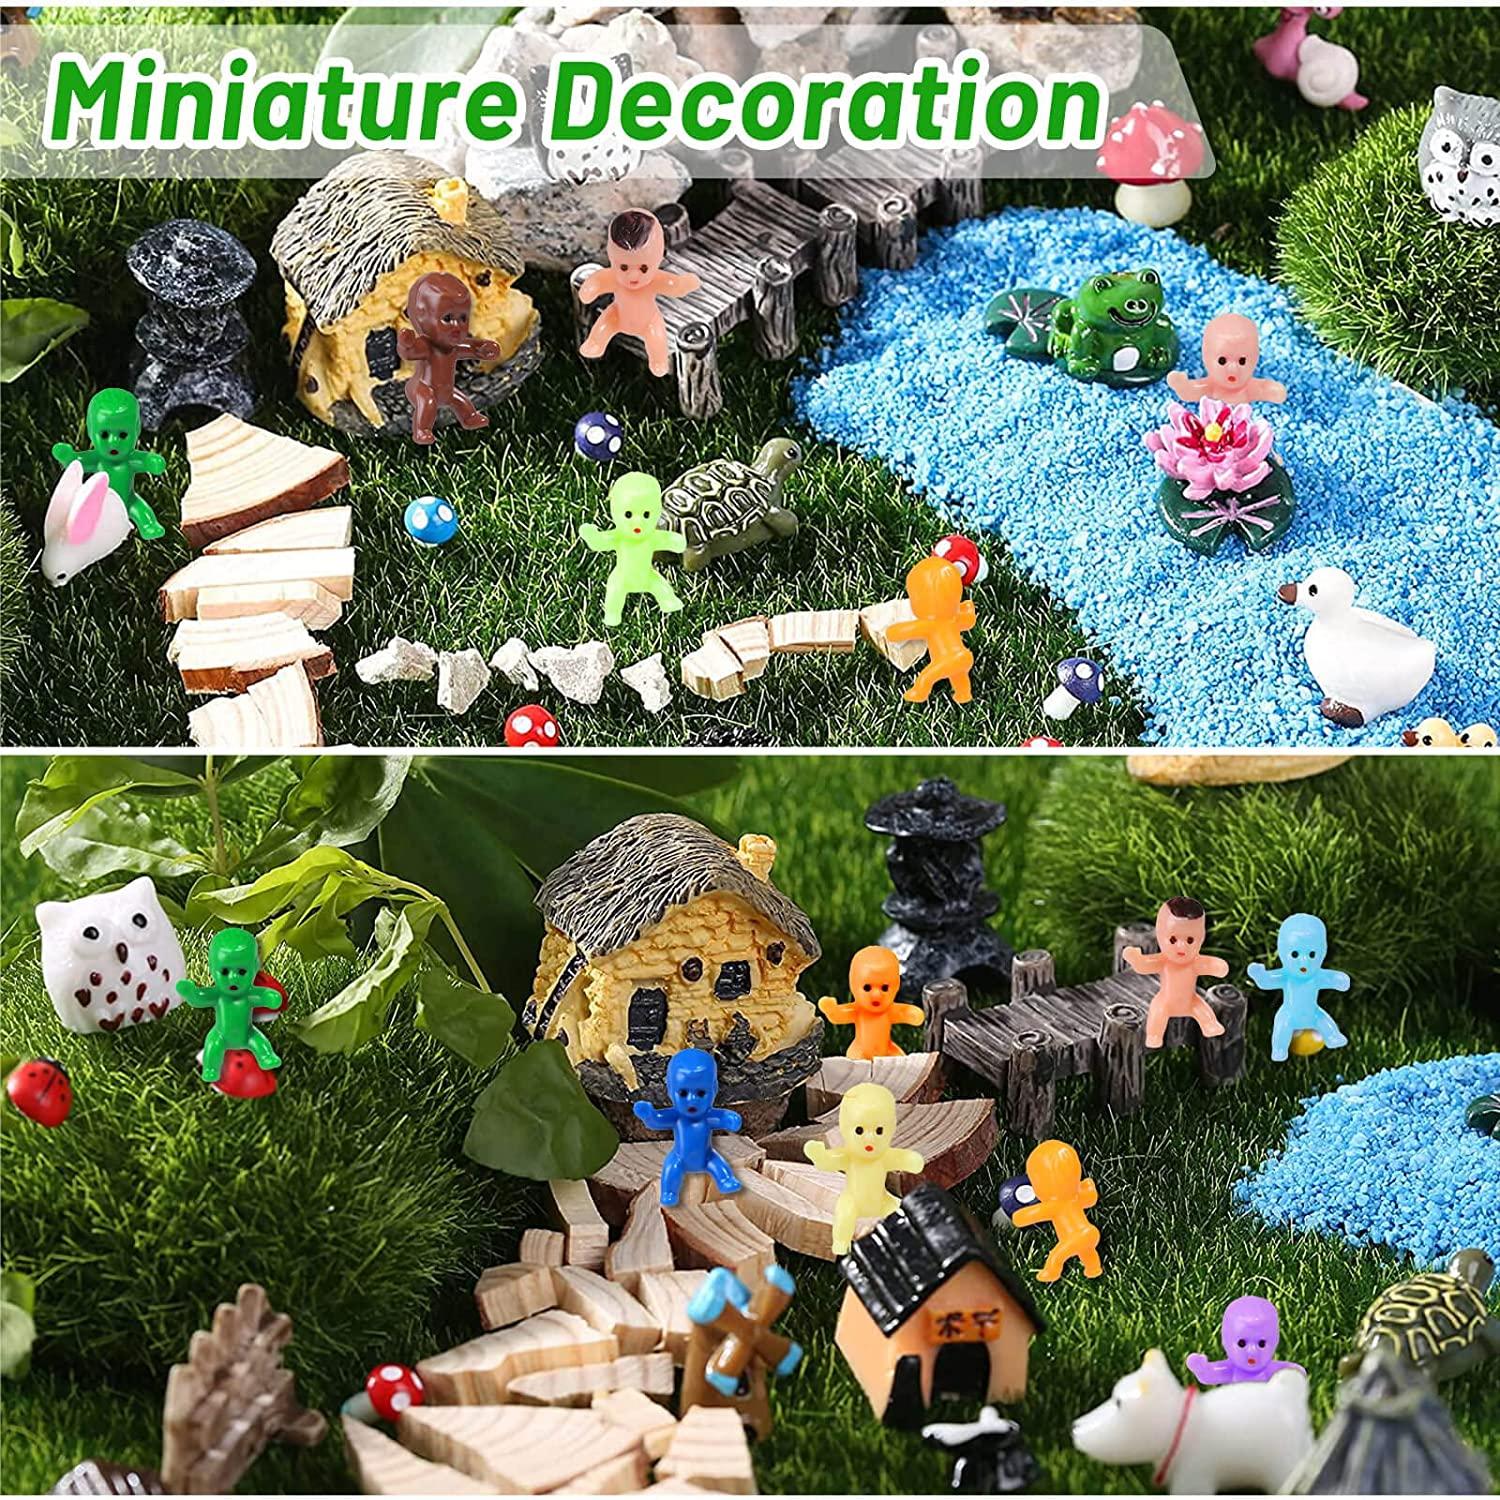 100 Pcs Mini Plastic Babies Creative Small Baby Figurines for